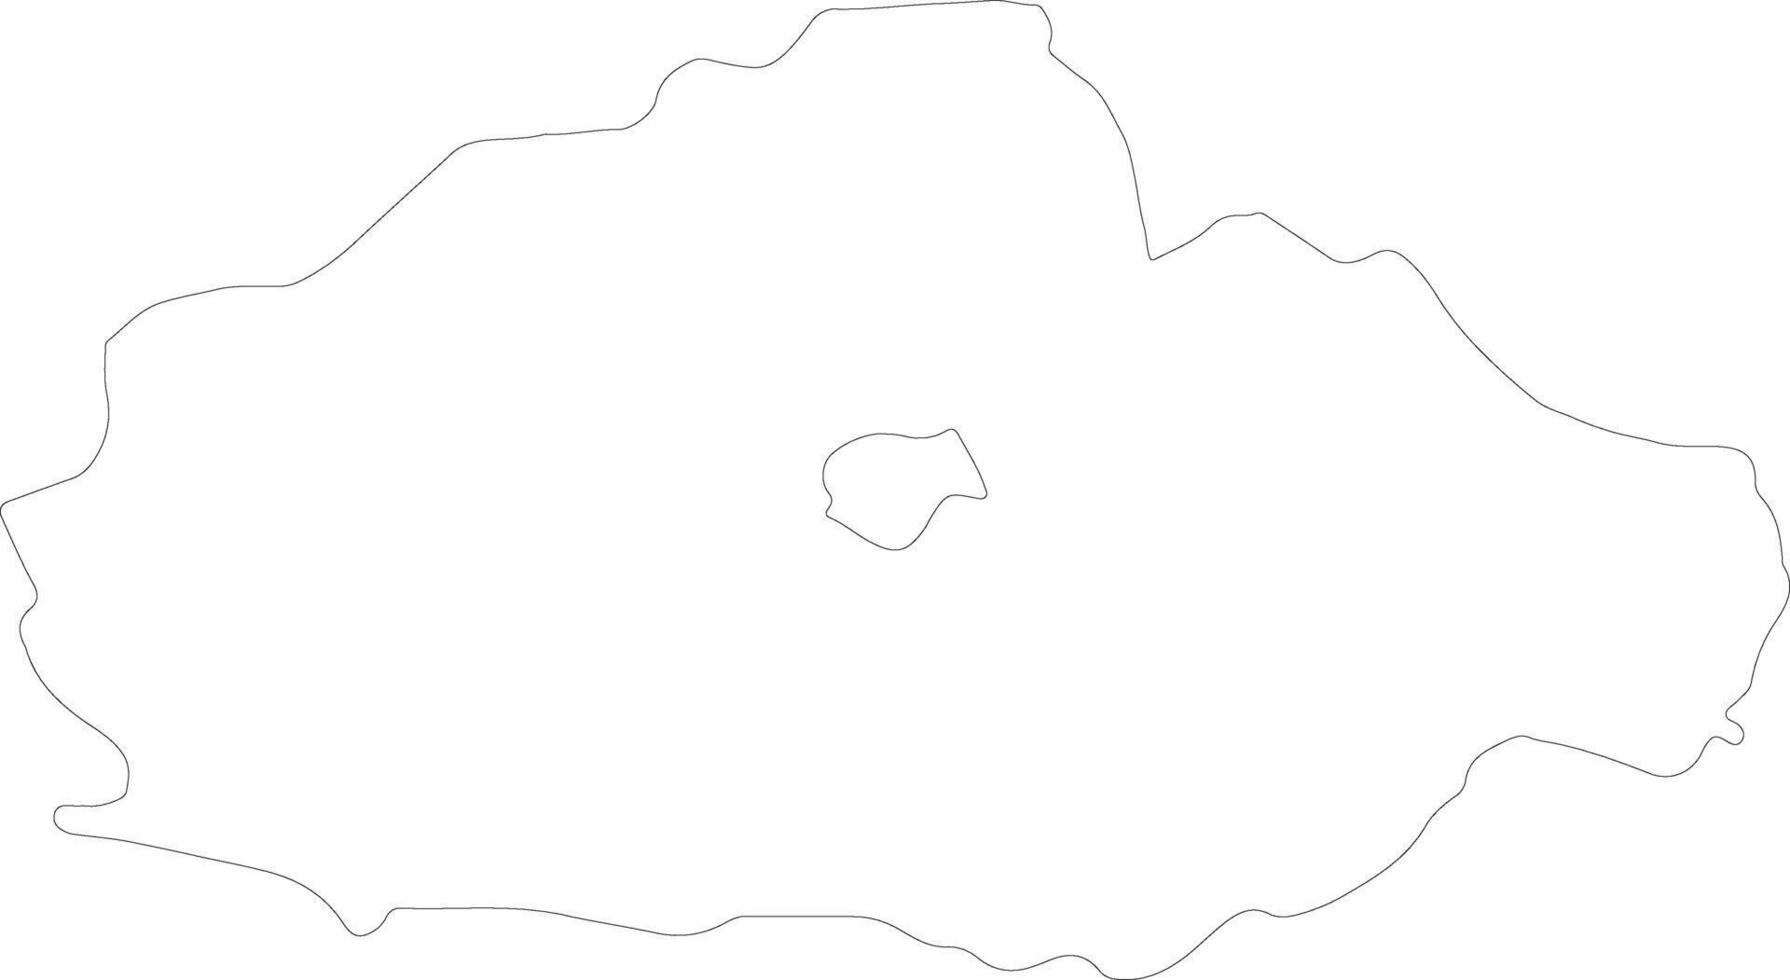 barania Ungheria schema carta geografica vettore